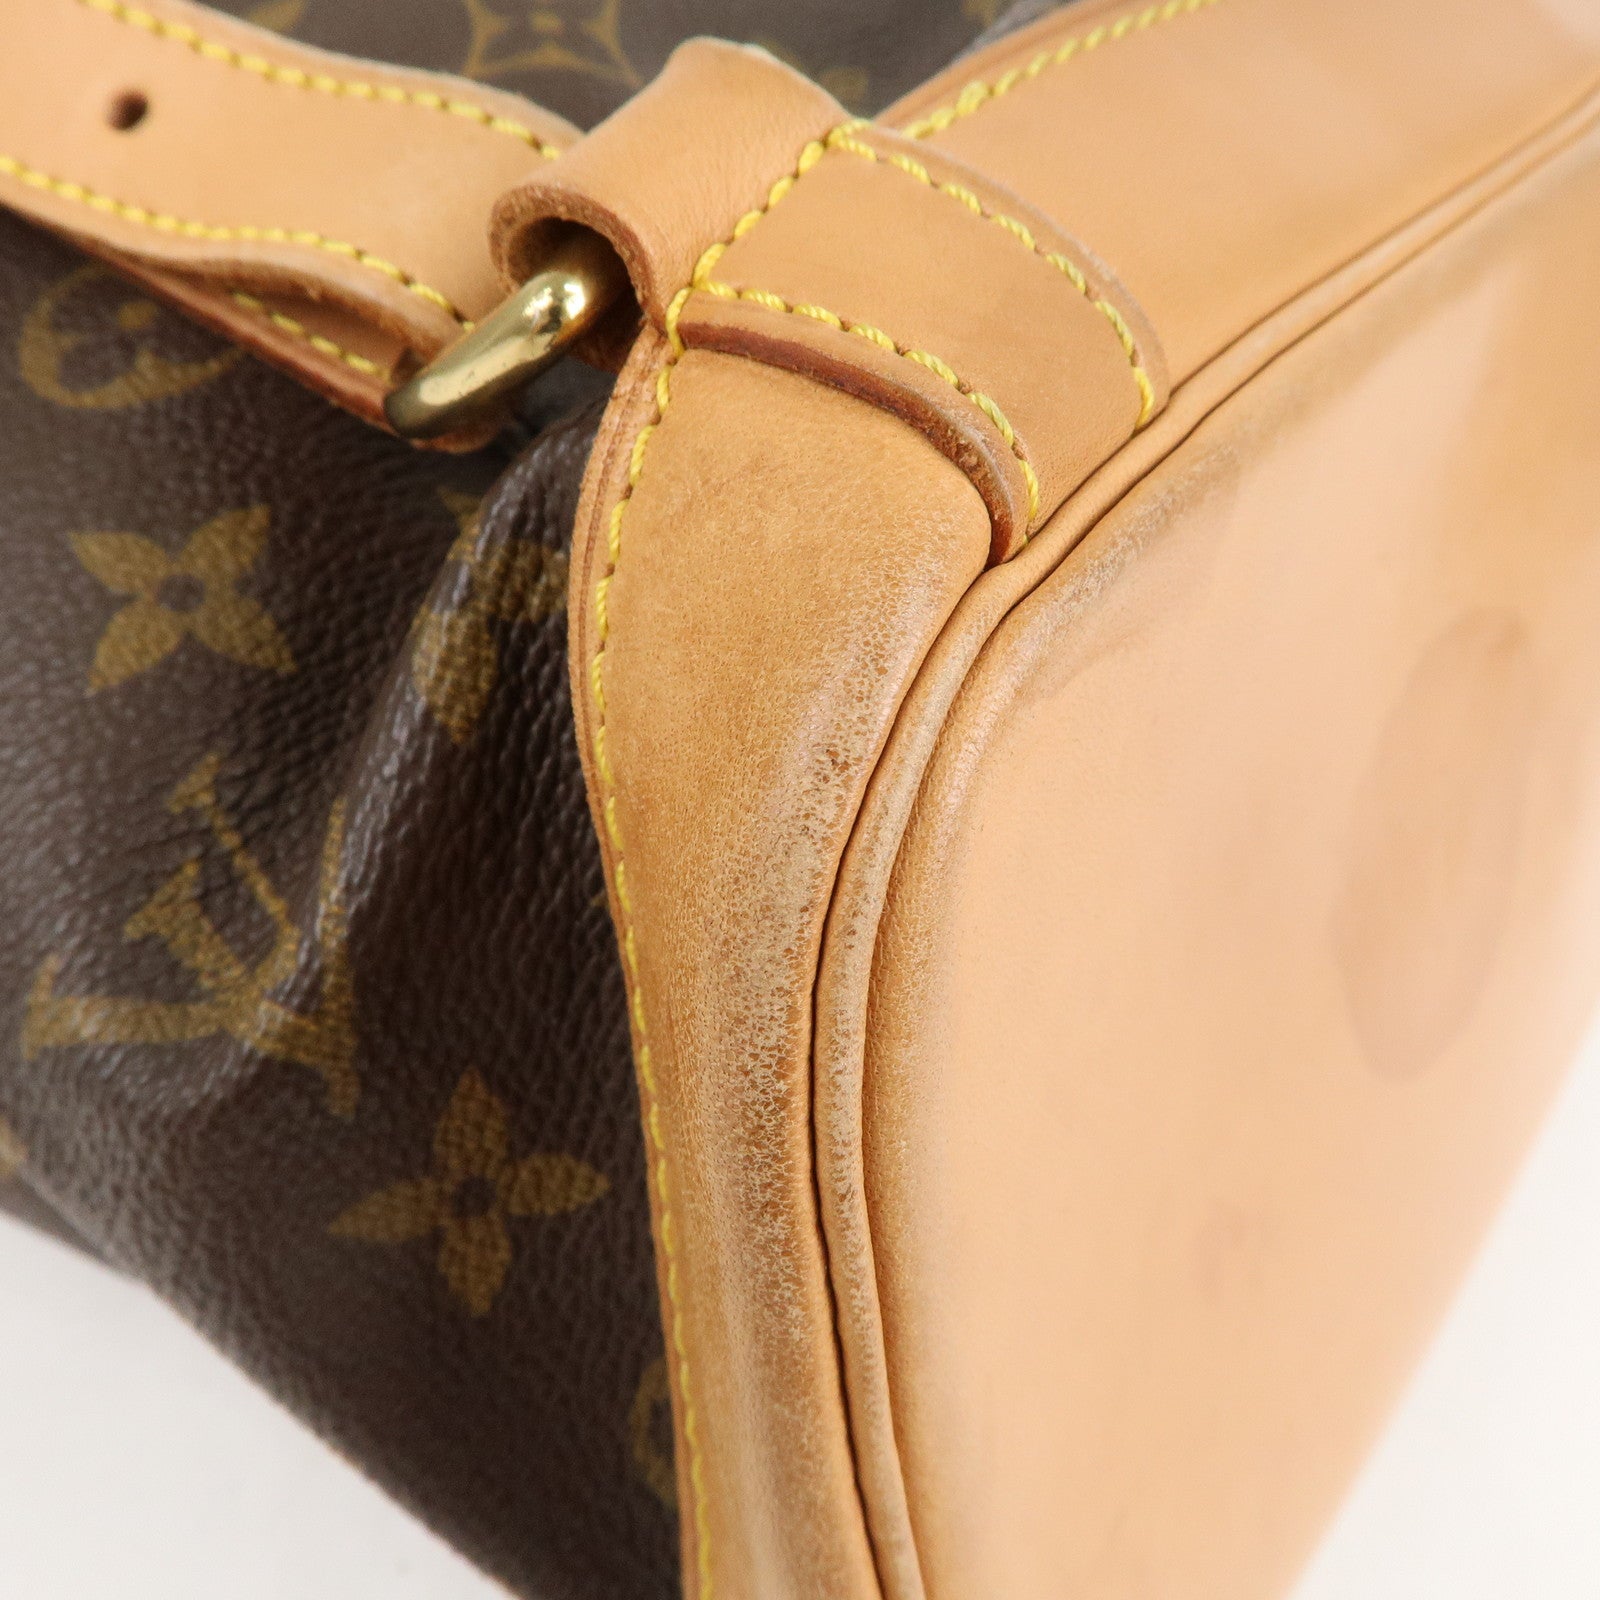 Louis Vuitton Montsouris Gm Monogram Mi0050 Backpack